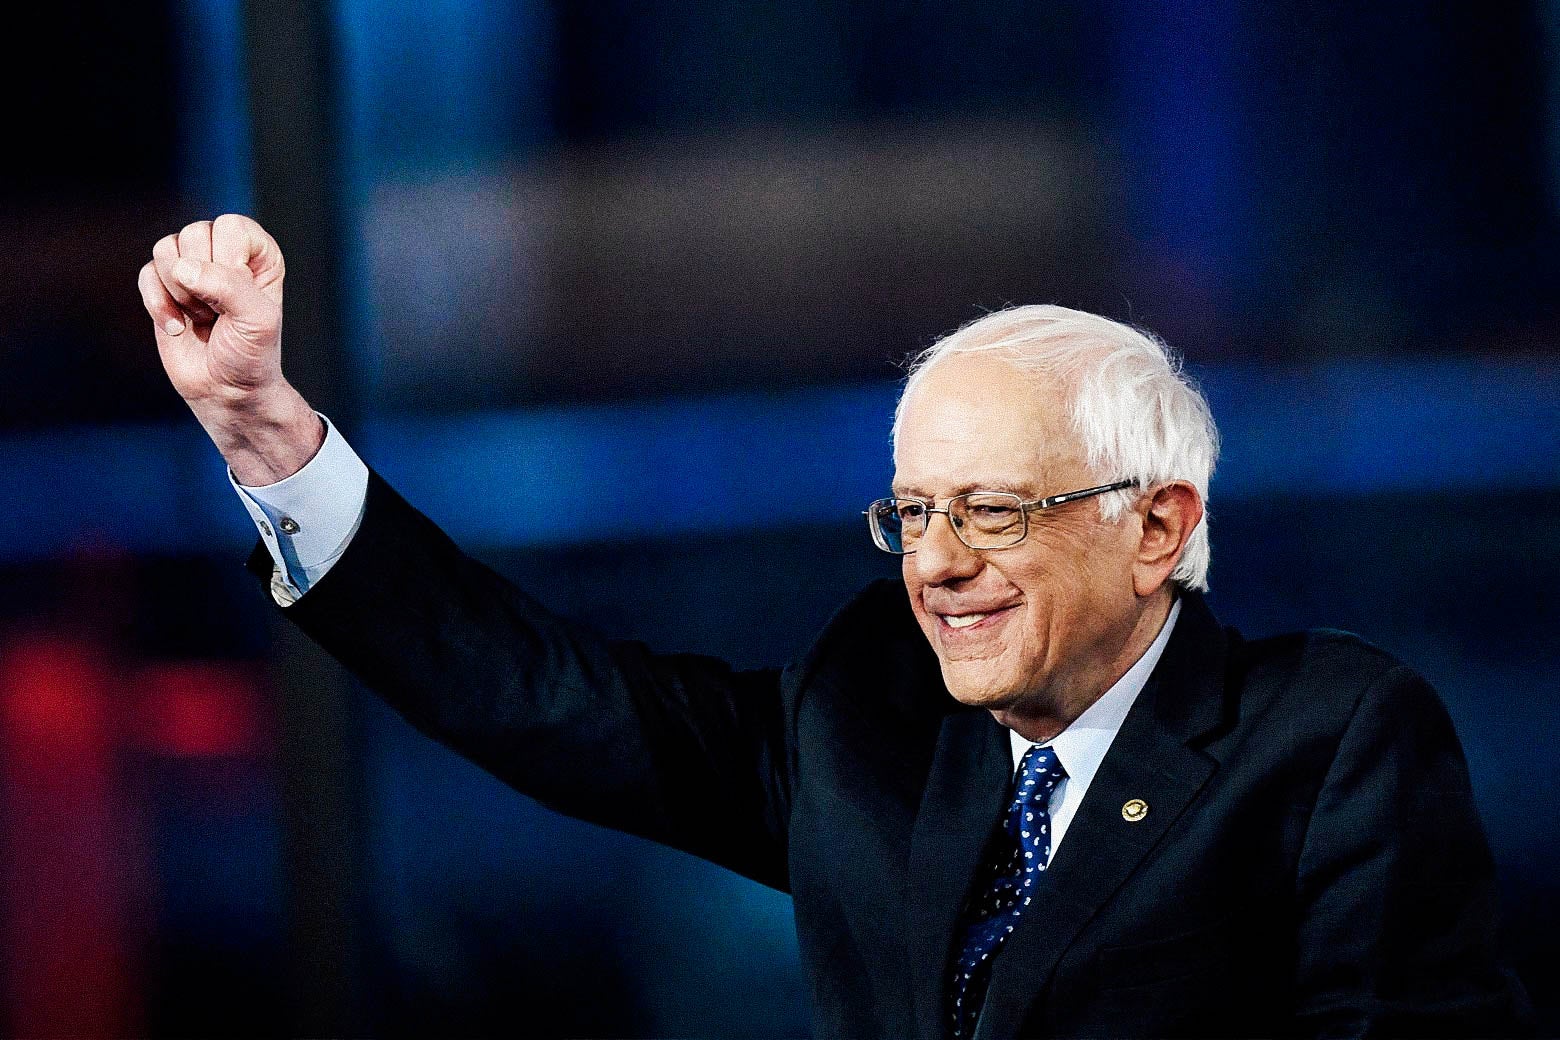 Sanders smiles and raises his fist onstage.